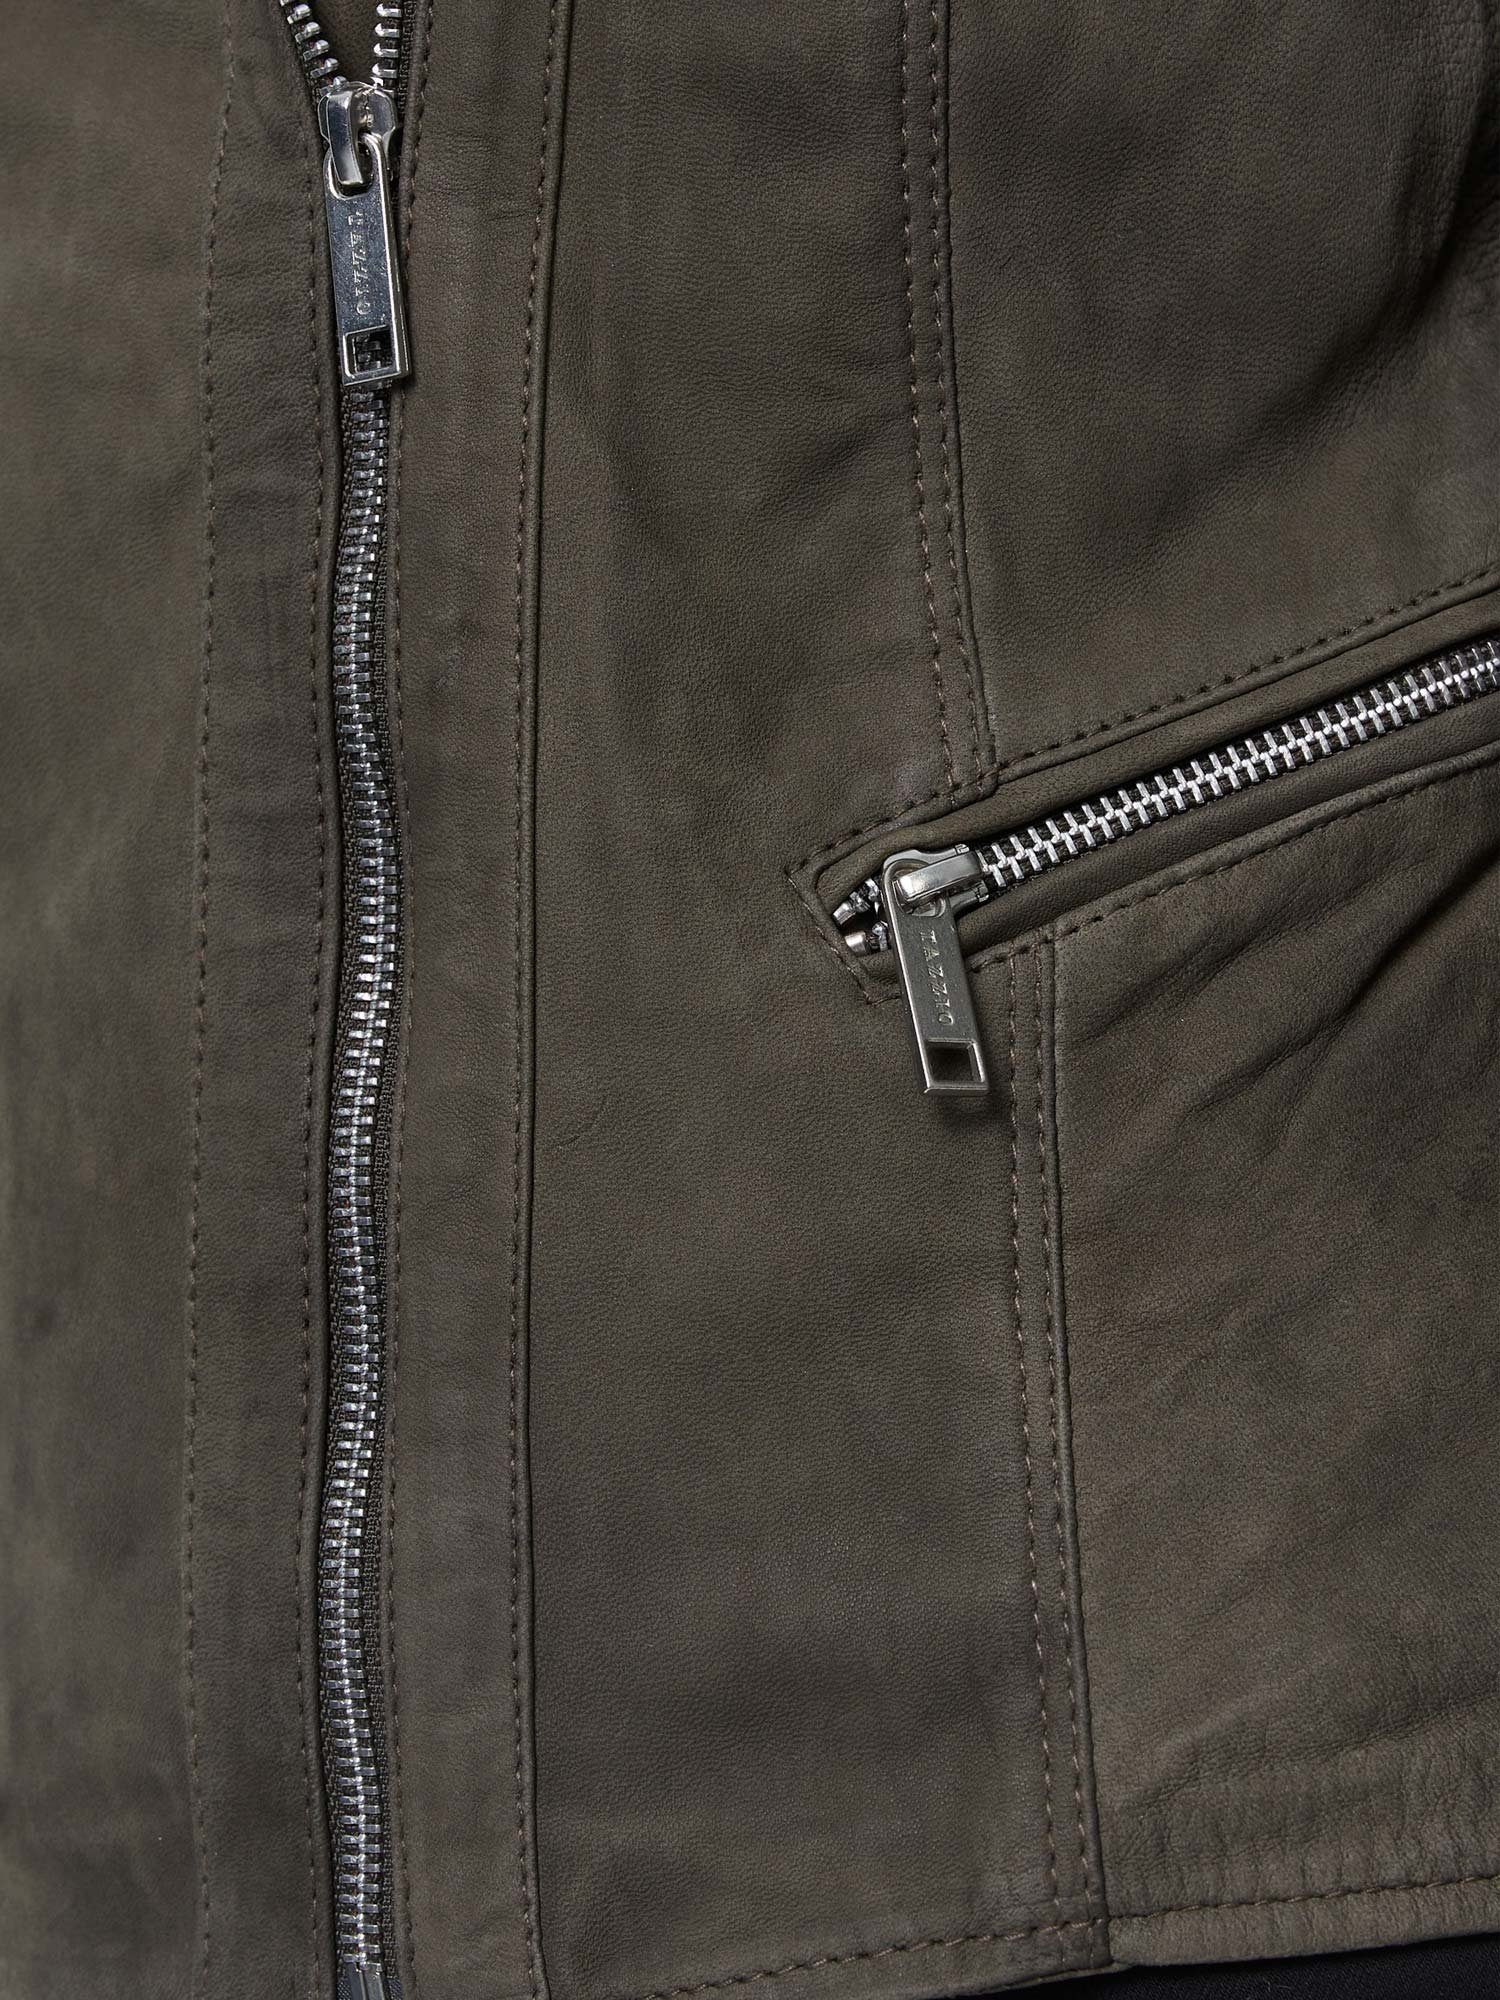 Zipper-Details Tazzio Damen Lederjacke Jacke Reverskragen im & khaki Leder mit Biker Look F500